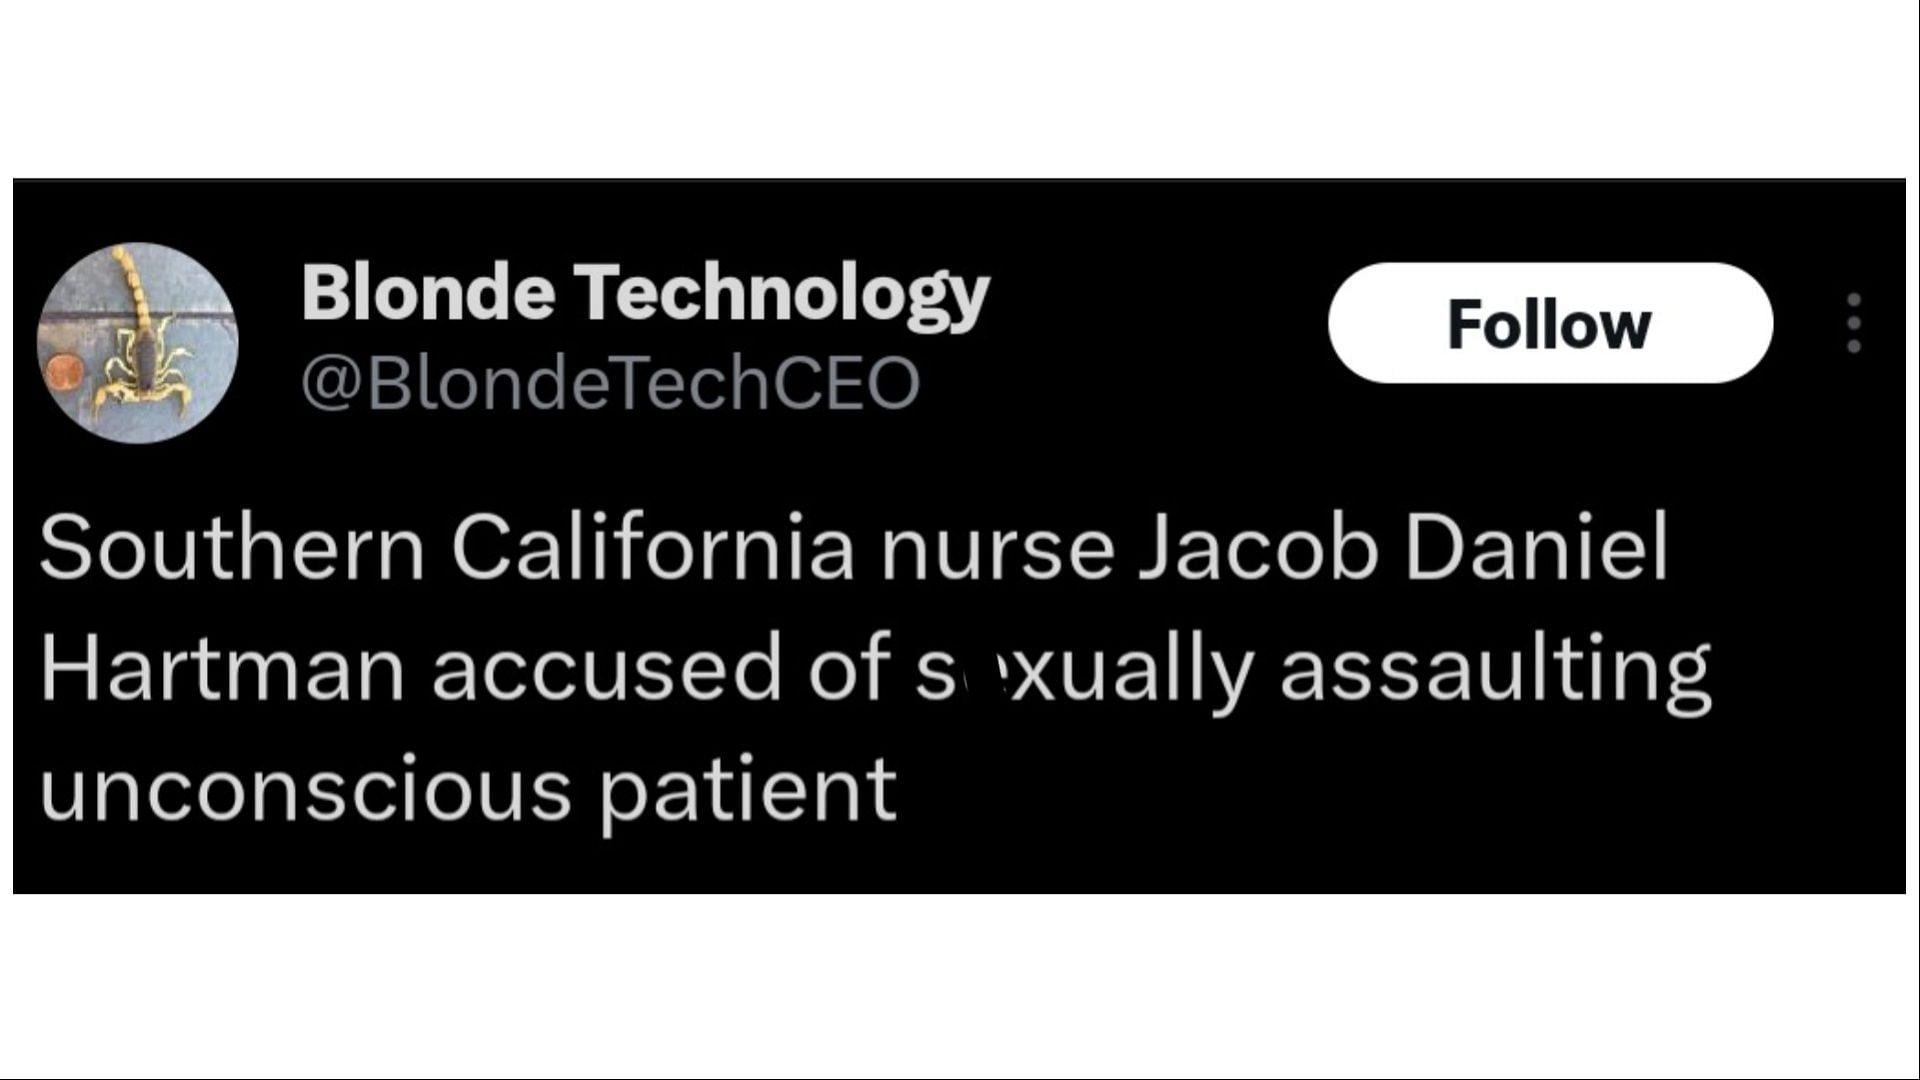 The California nurse faces assault charges (Image via Blonde Technology/X)